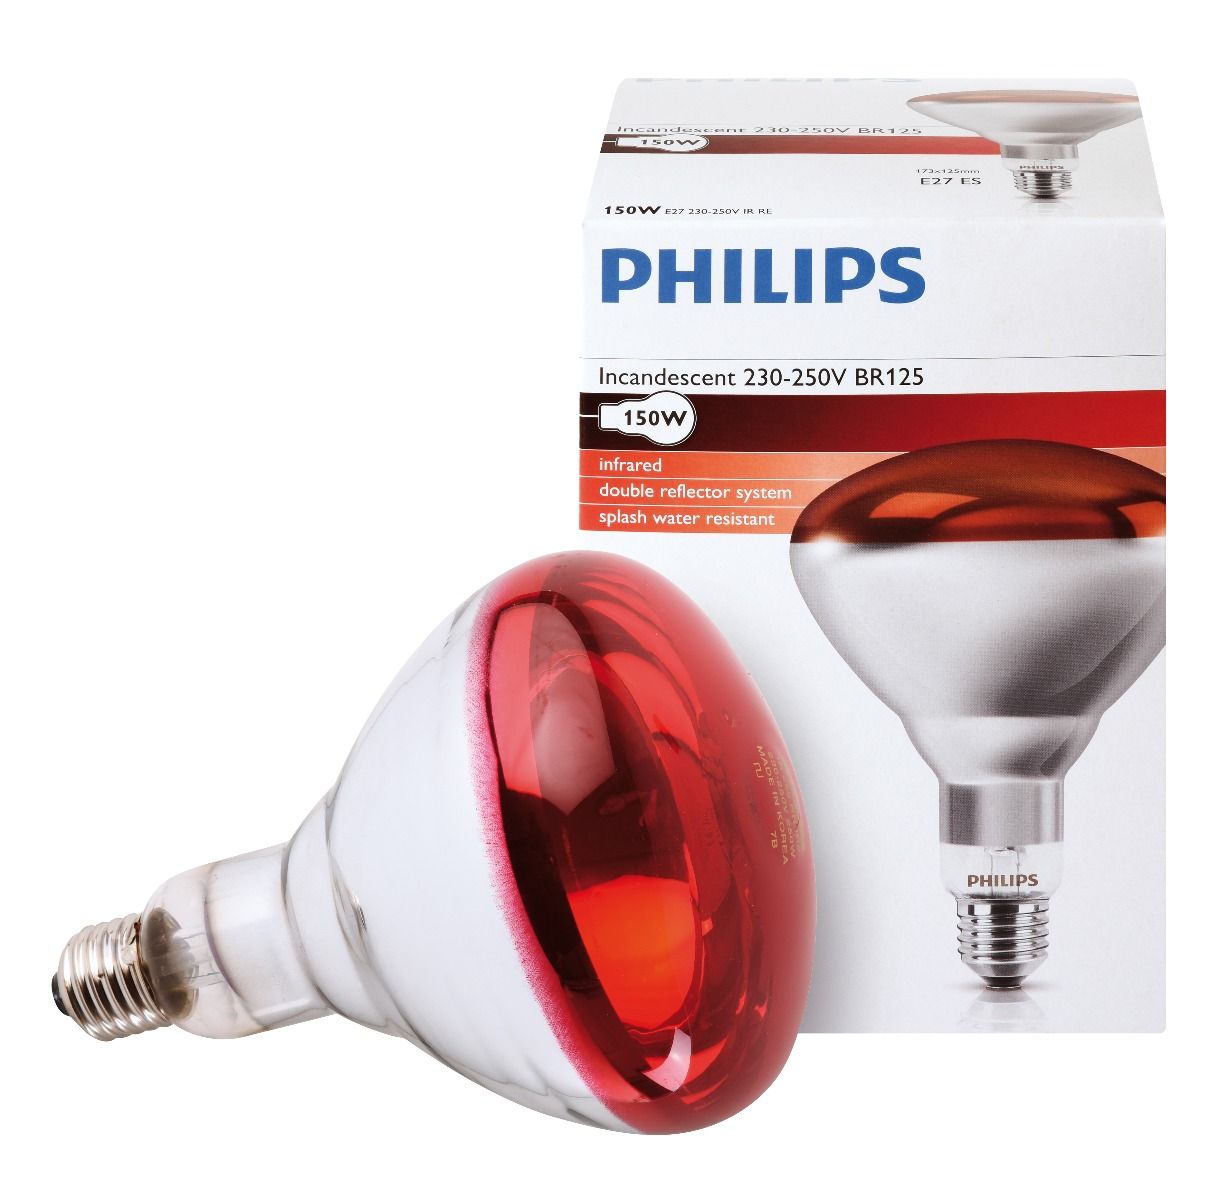 Лампа инфракрасная Philips ir 250w. Лампа инфракрасная Philips par38 ir 250w e27 красная. Лампа накаливания инфракрасная зеркальная Philips br125 ir 150w e27 230-250v Red 1ct/10. Патрон для инфракрасной лампы Philips br125 ir 150w e27 230 v Red.